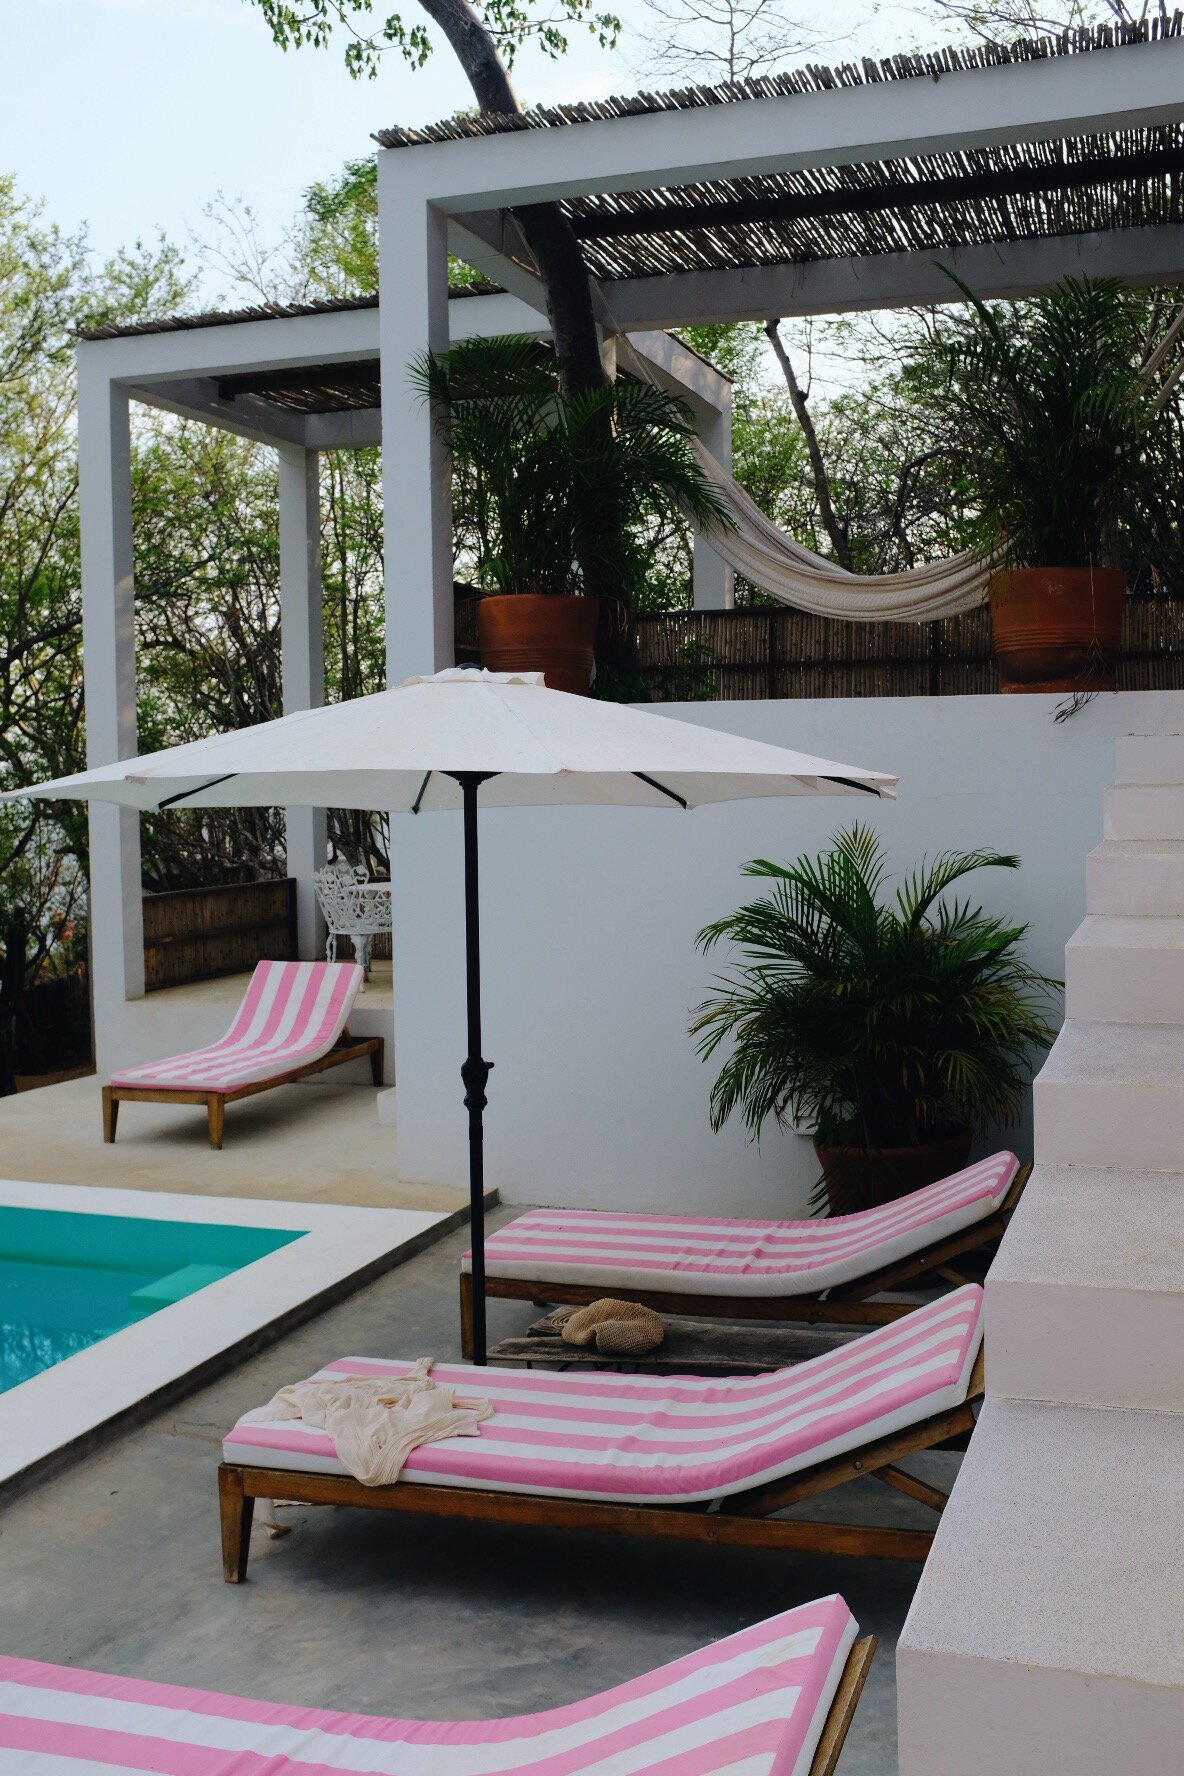 Hotel-Weekend-BArefoot-Luxury-Oaxaca-Mexico-Cocolia.jpeg